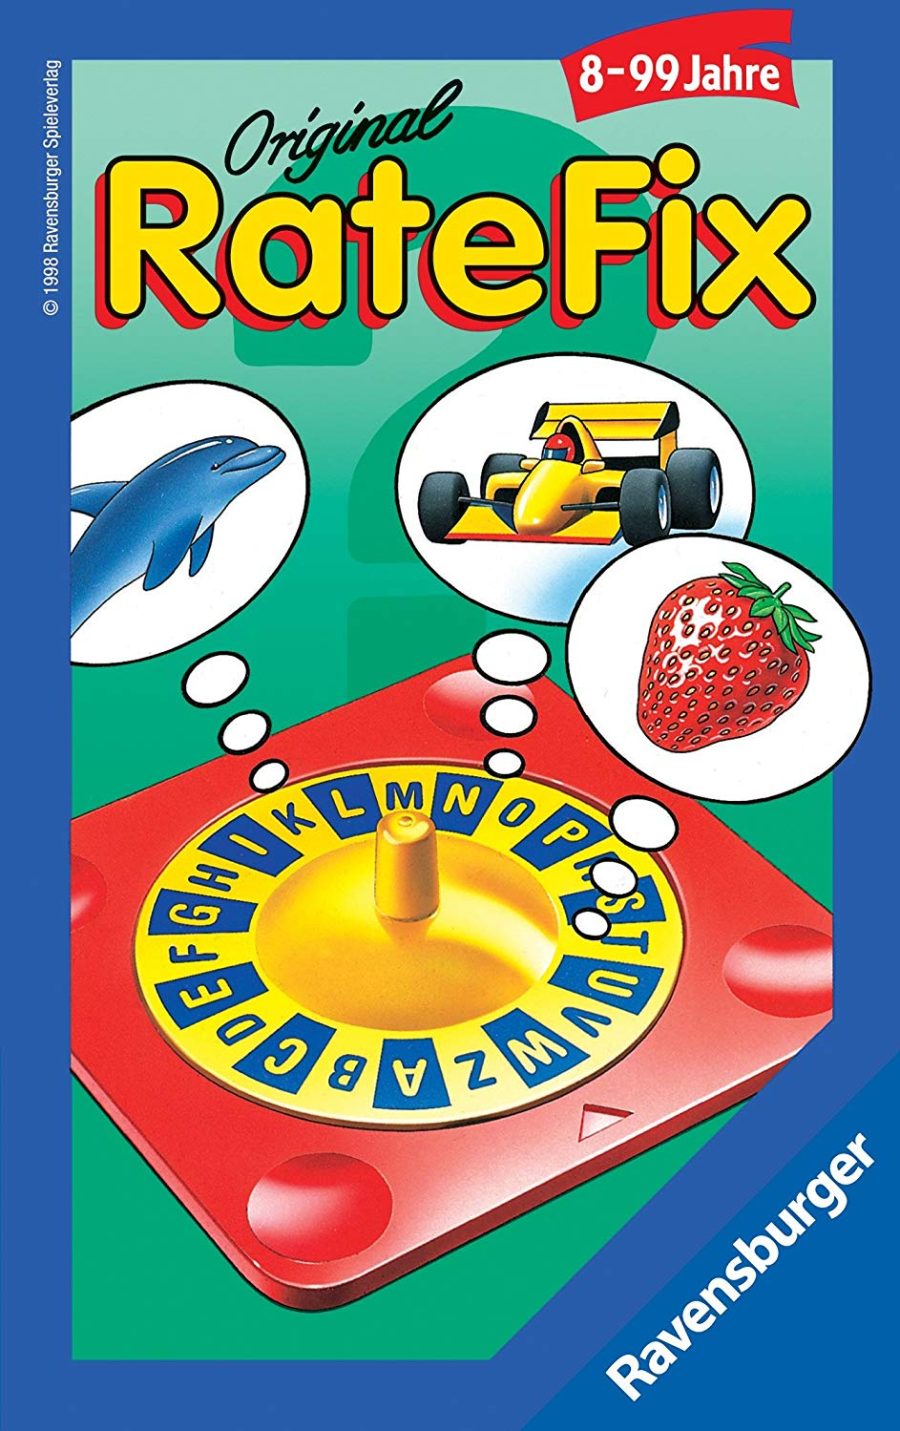 RateFix Spielanleitung - PDF Download